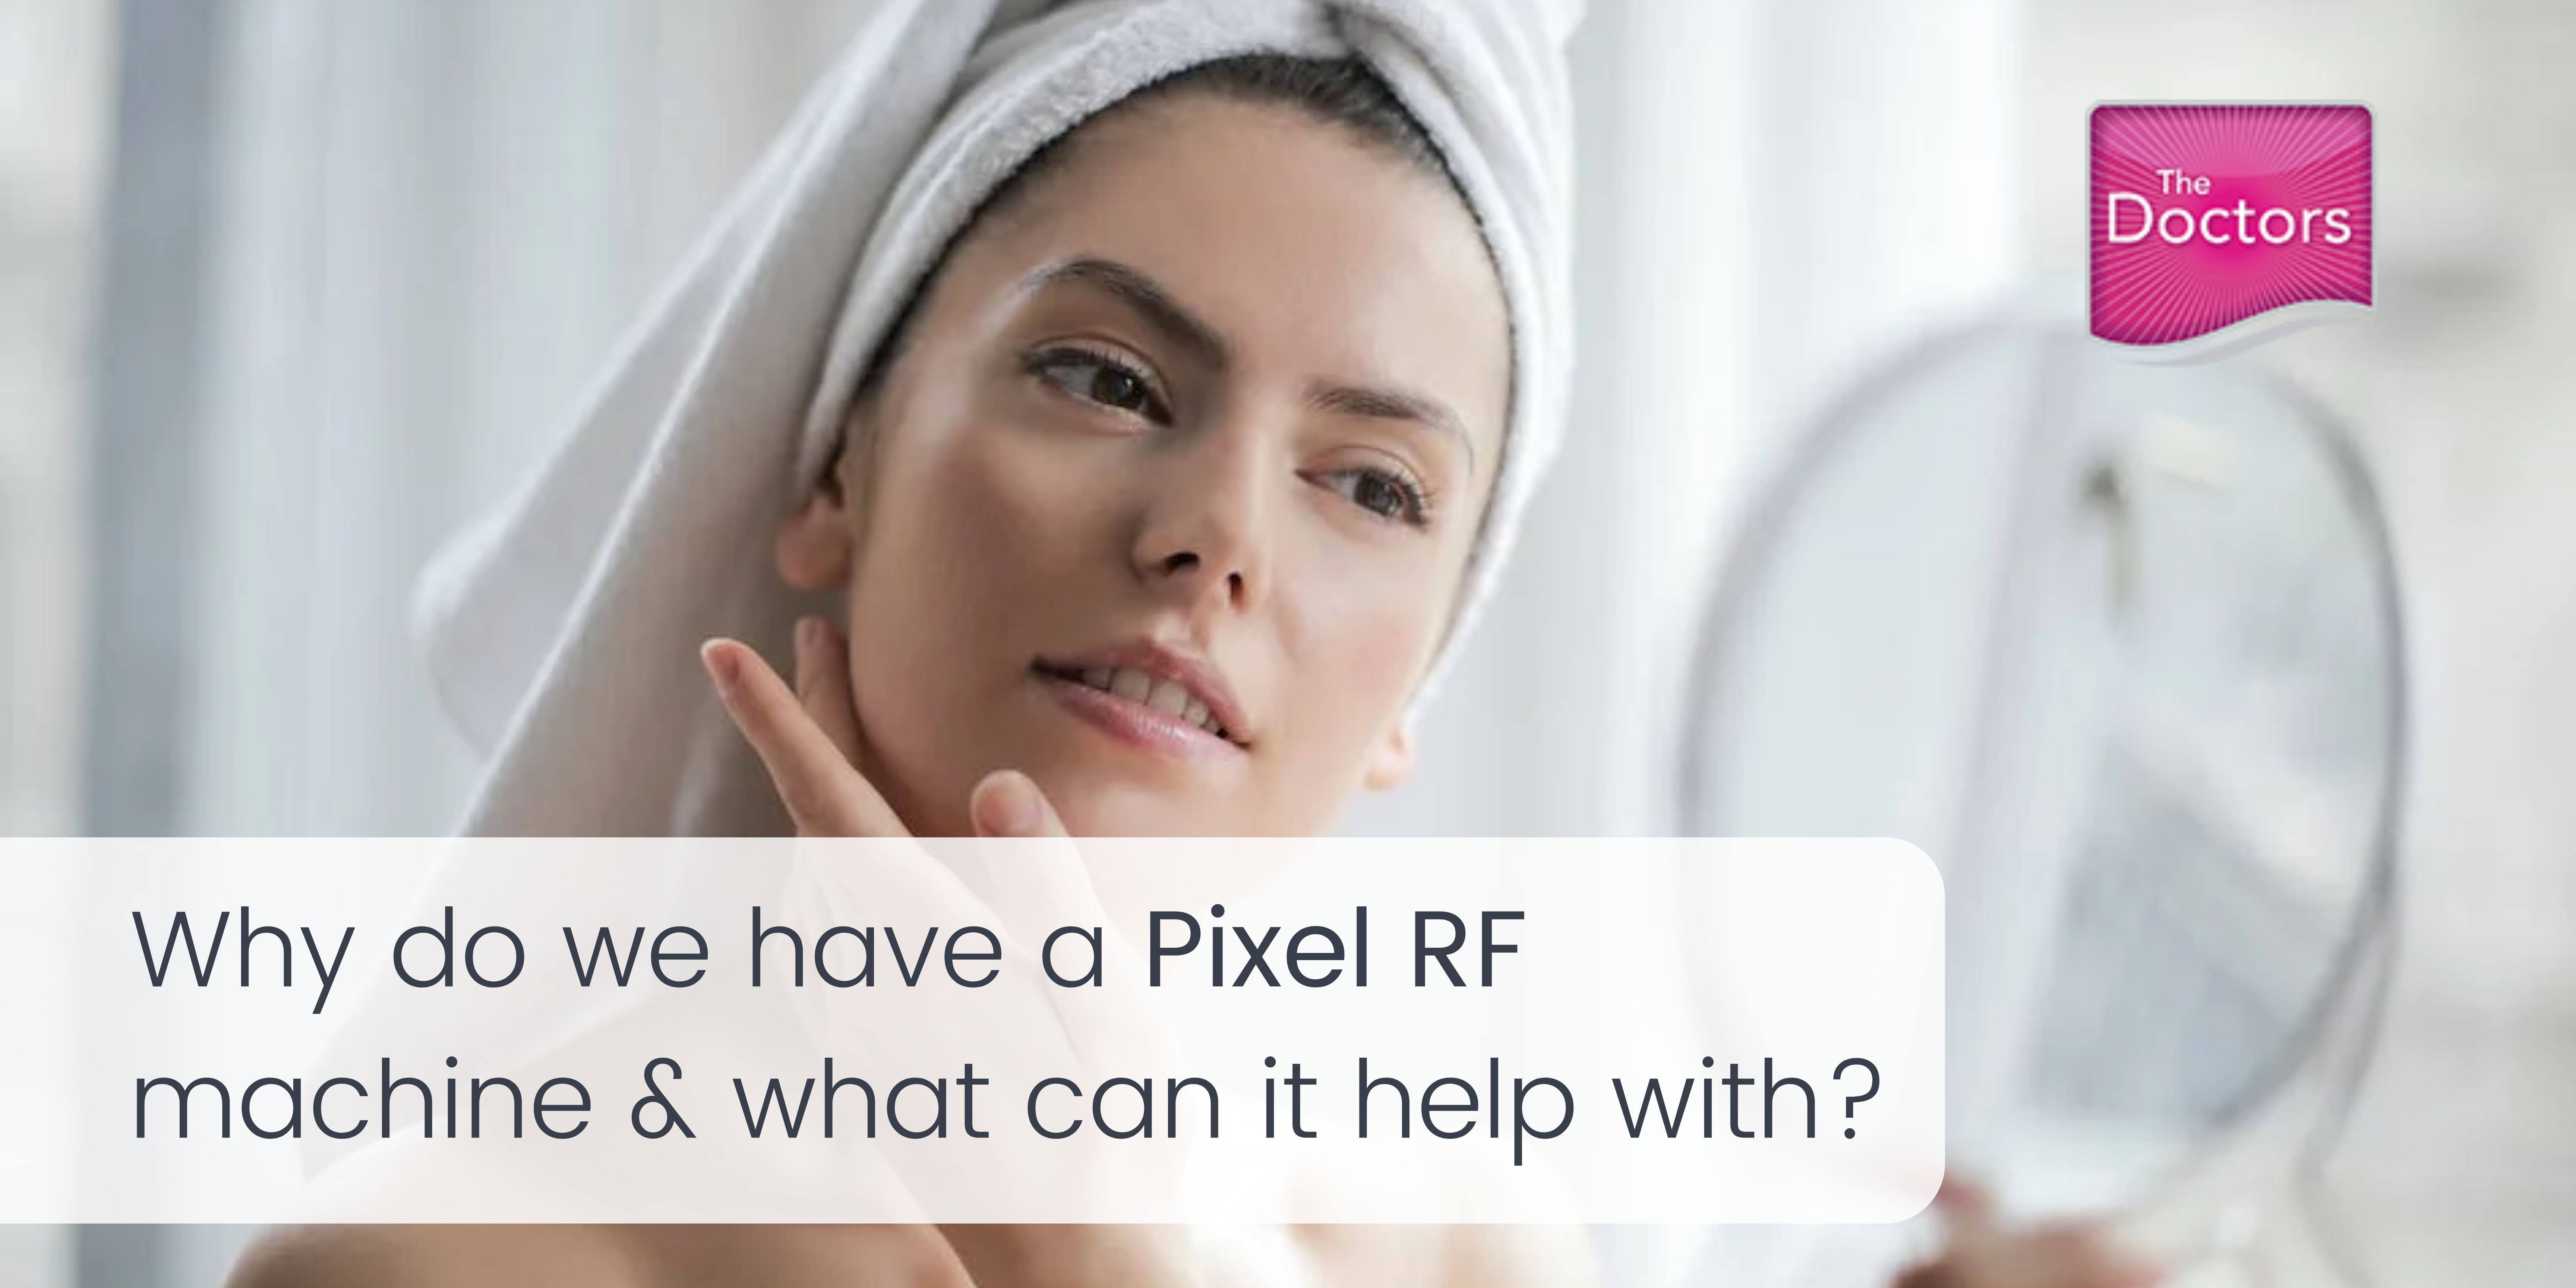 Pixel RF treatment